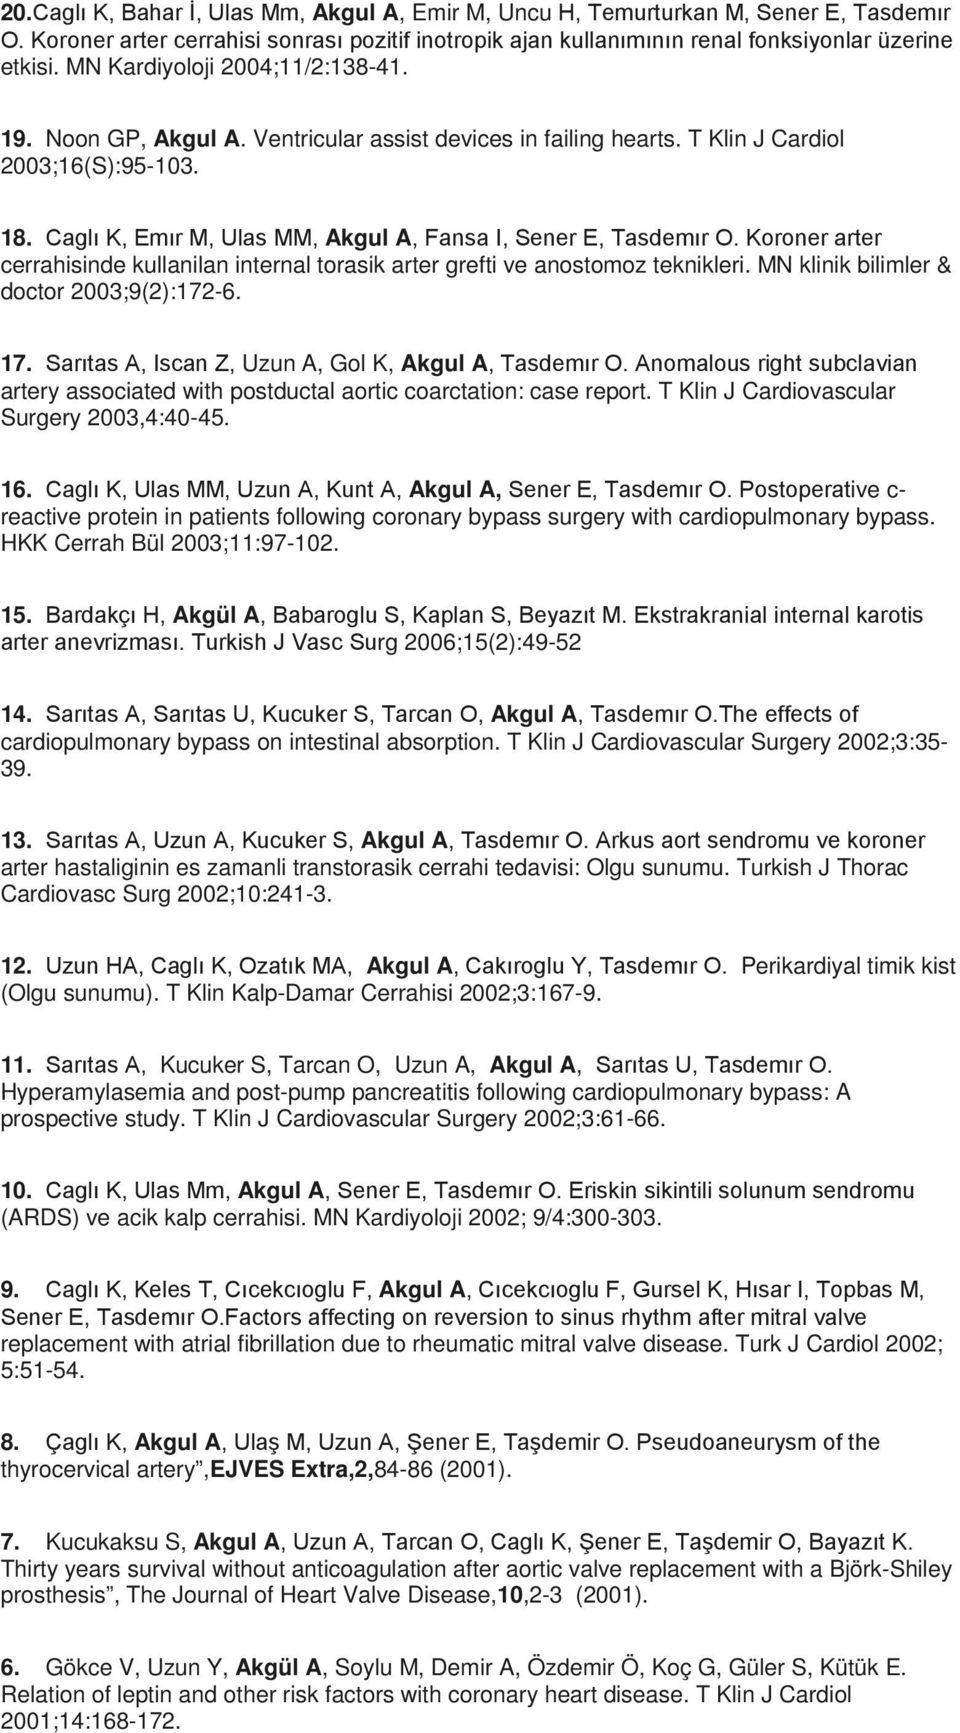 Caglı K, Emır M, Ulas MM, Akgul A, Fansa I, Sener E, Tasdemır O. Koroner arter cerrahisinde kullanilan internal torasik arter grefti ve anostomoz teknikleri.